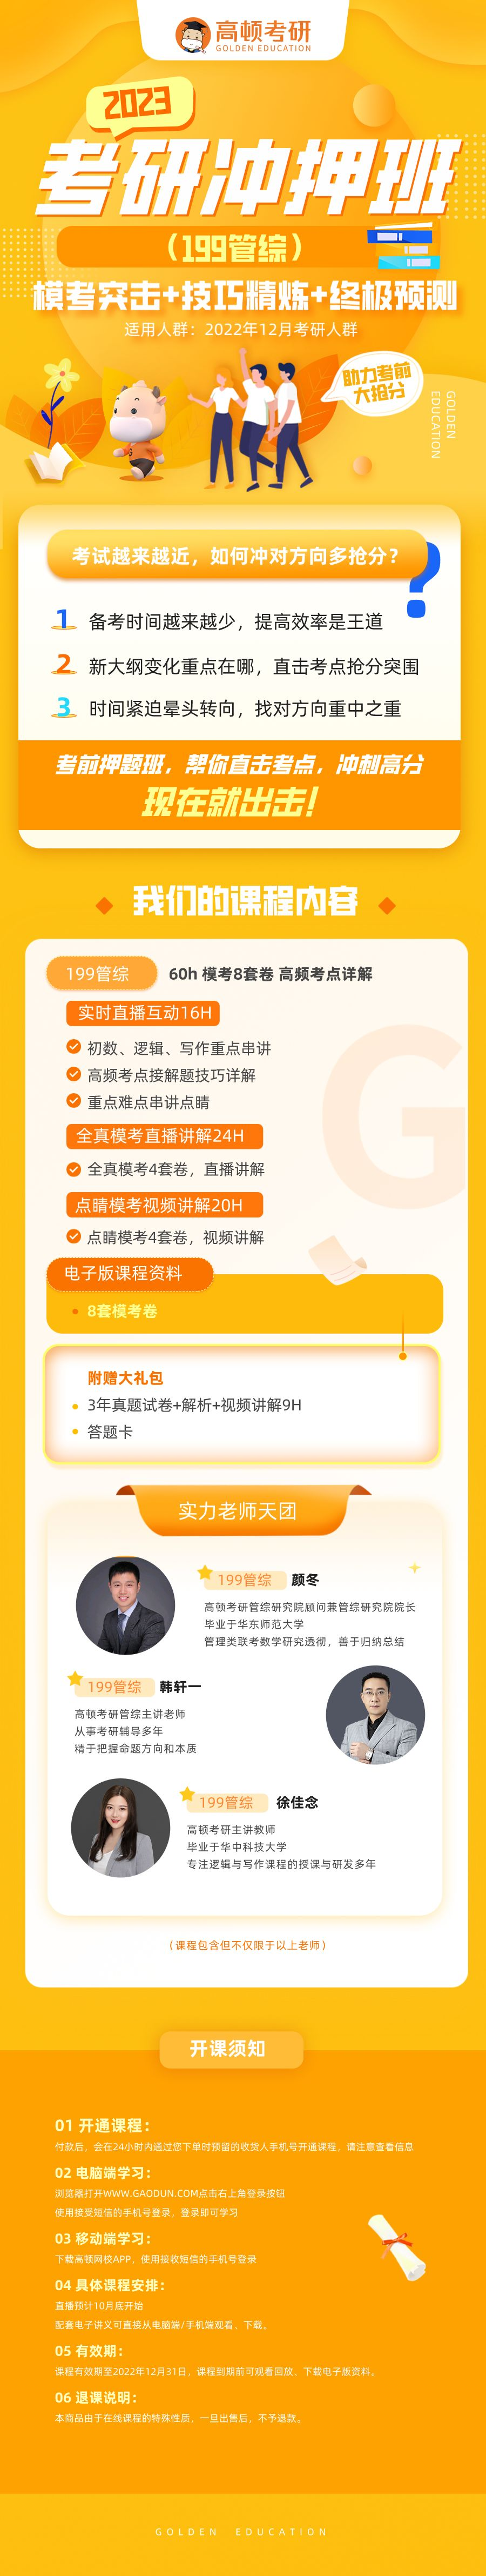 https://simg01.gaodunwangxiao.com/uploadfiles/product-center/202210/28/5dc1d_20221028101040.png